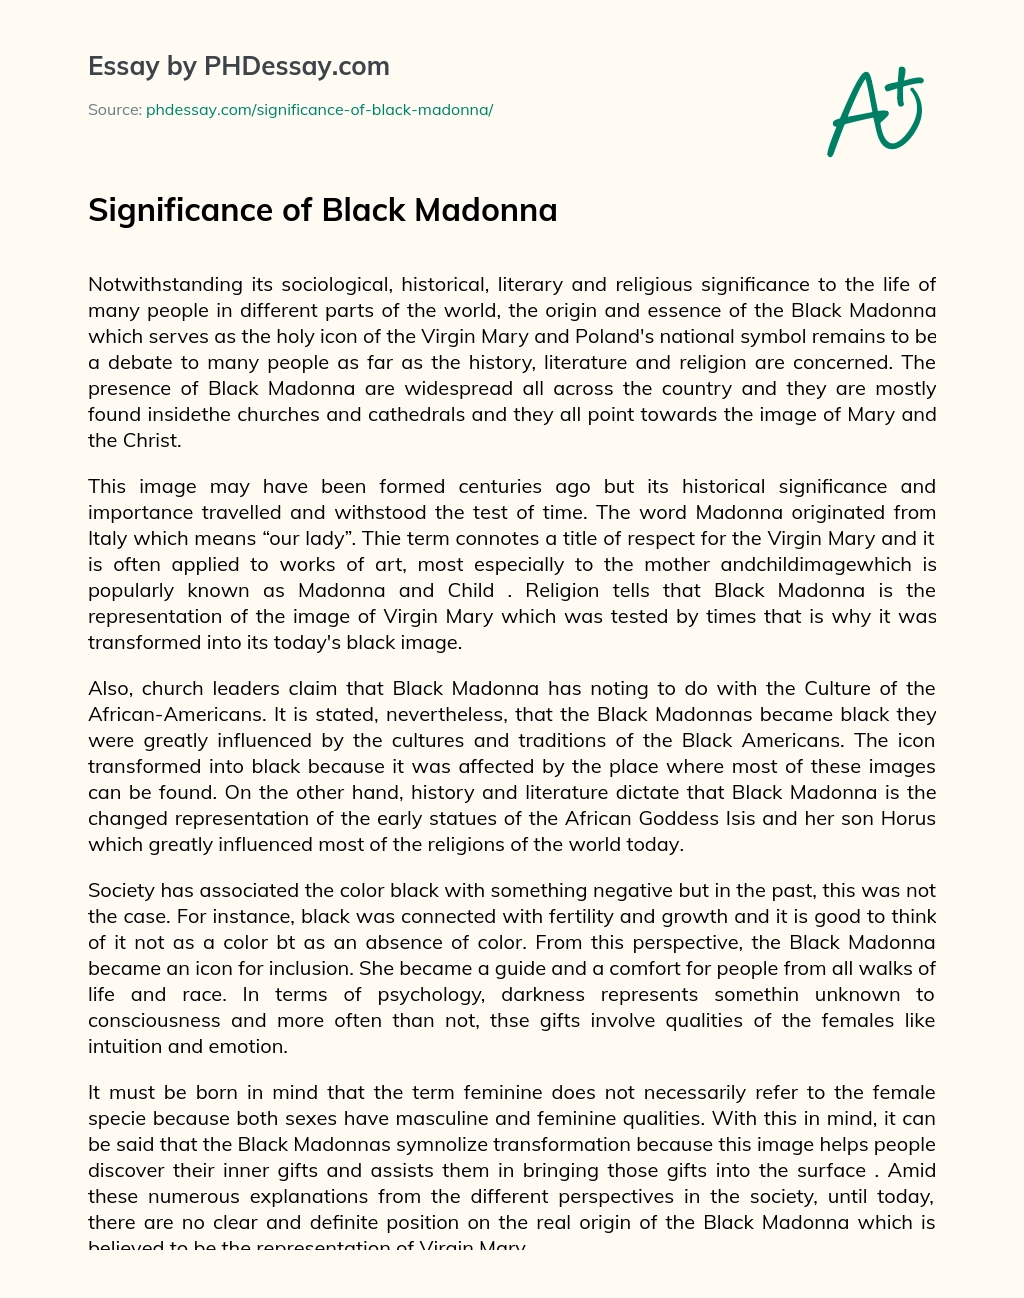 Significance of Black Madonna essay